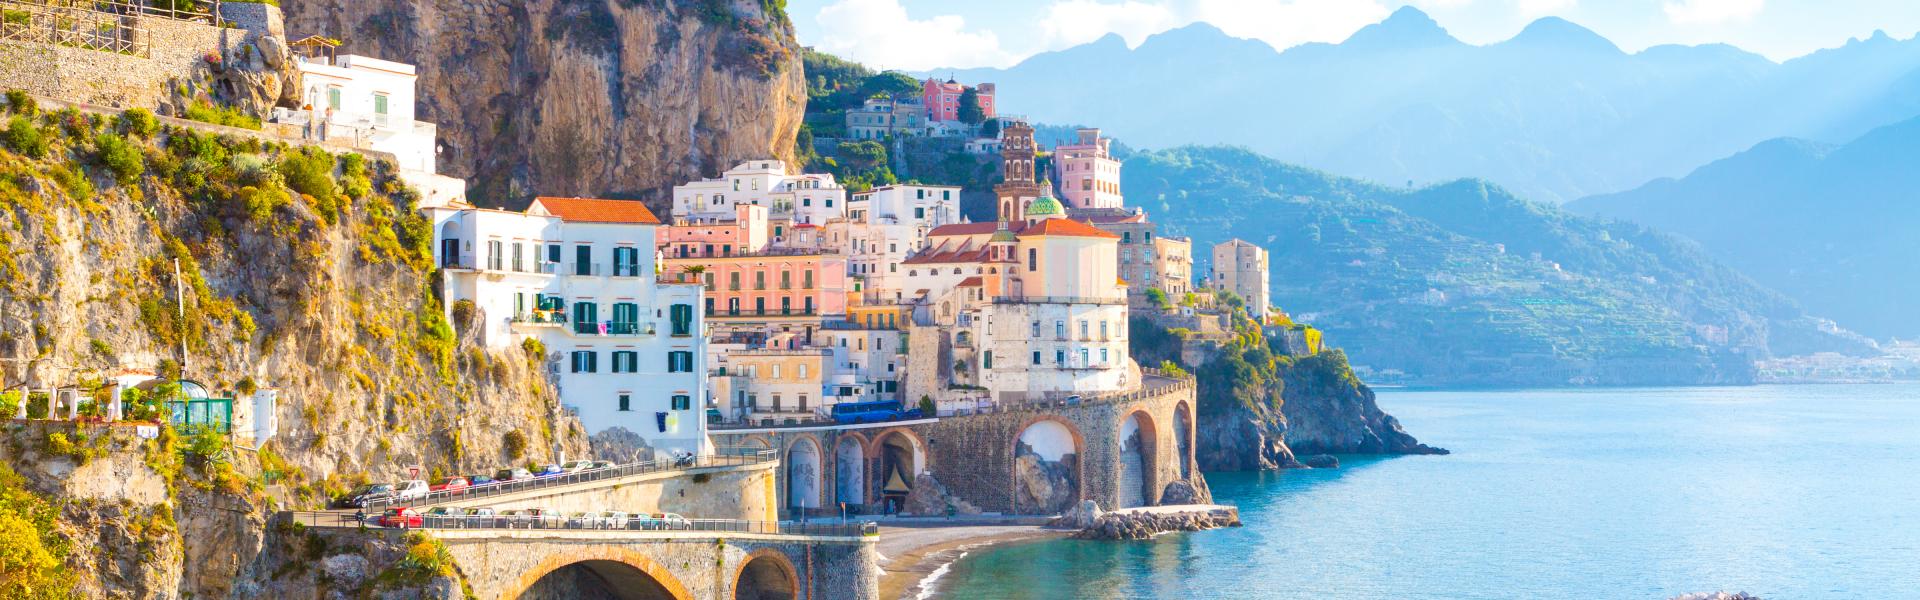 Amalfi-kueste Scenic View